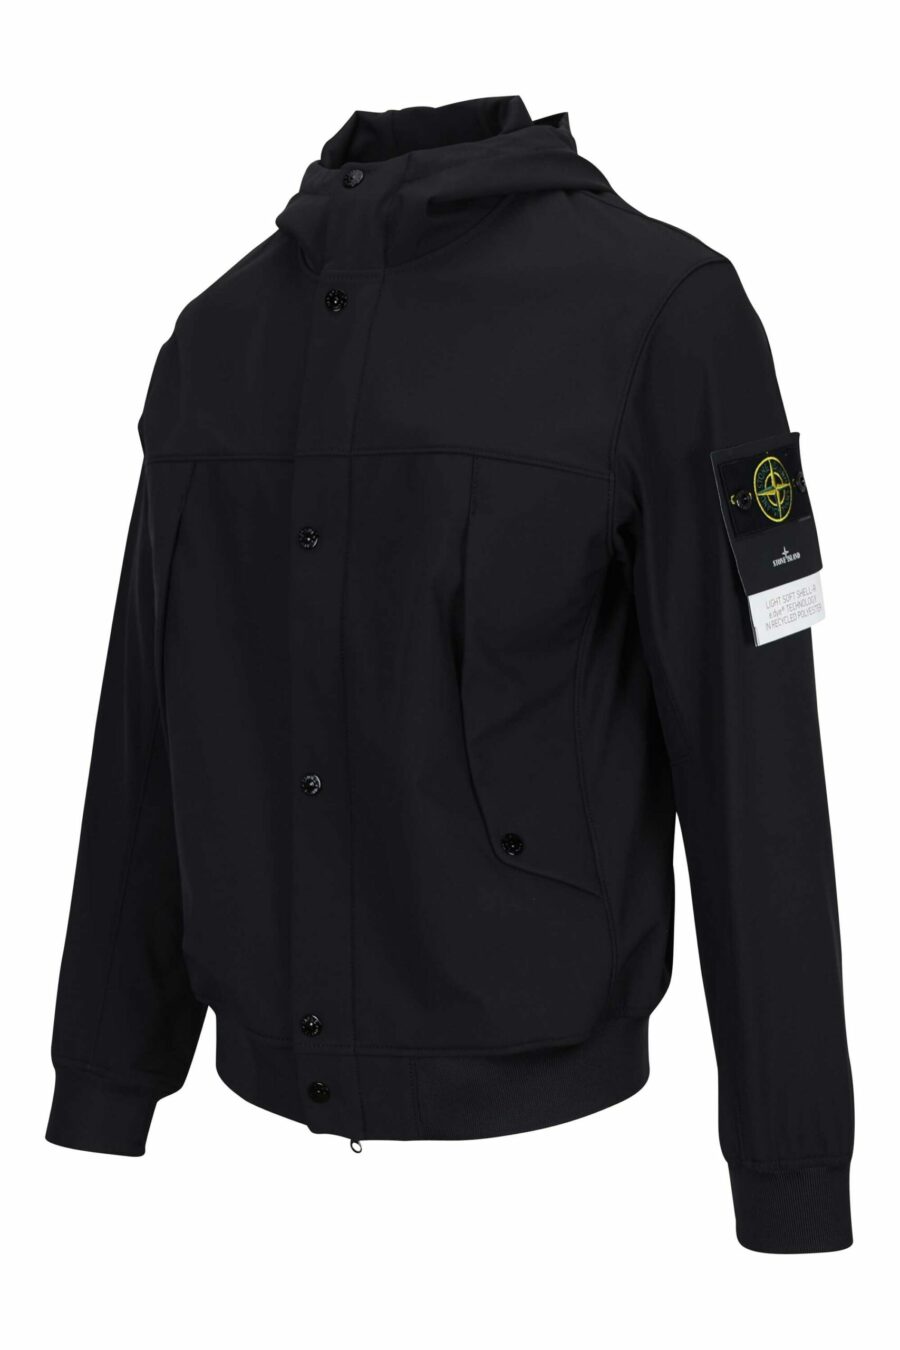 Schwarze Jacke mit Kompass-Logoaufnäher - 8052572897986 1 skaliert